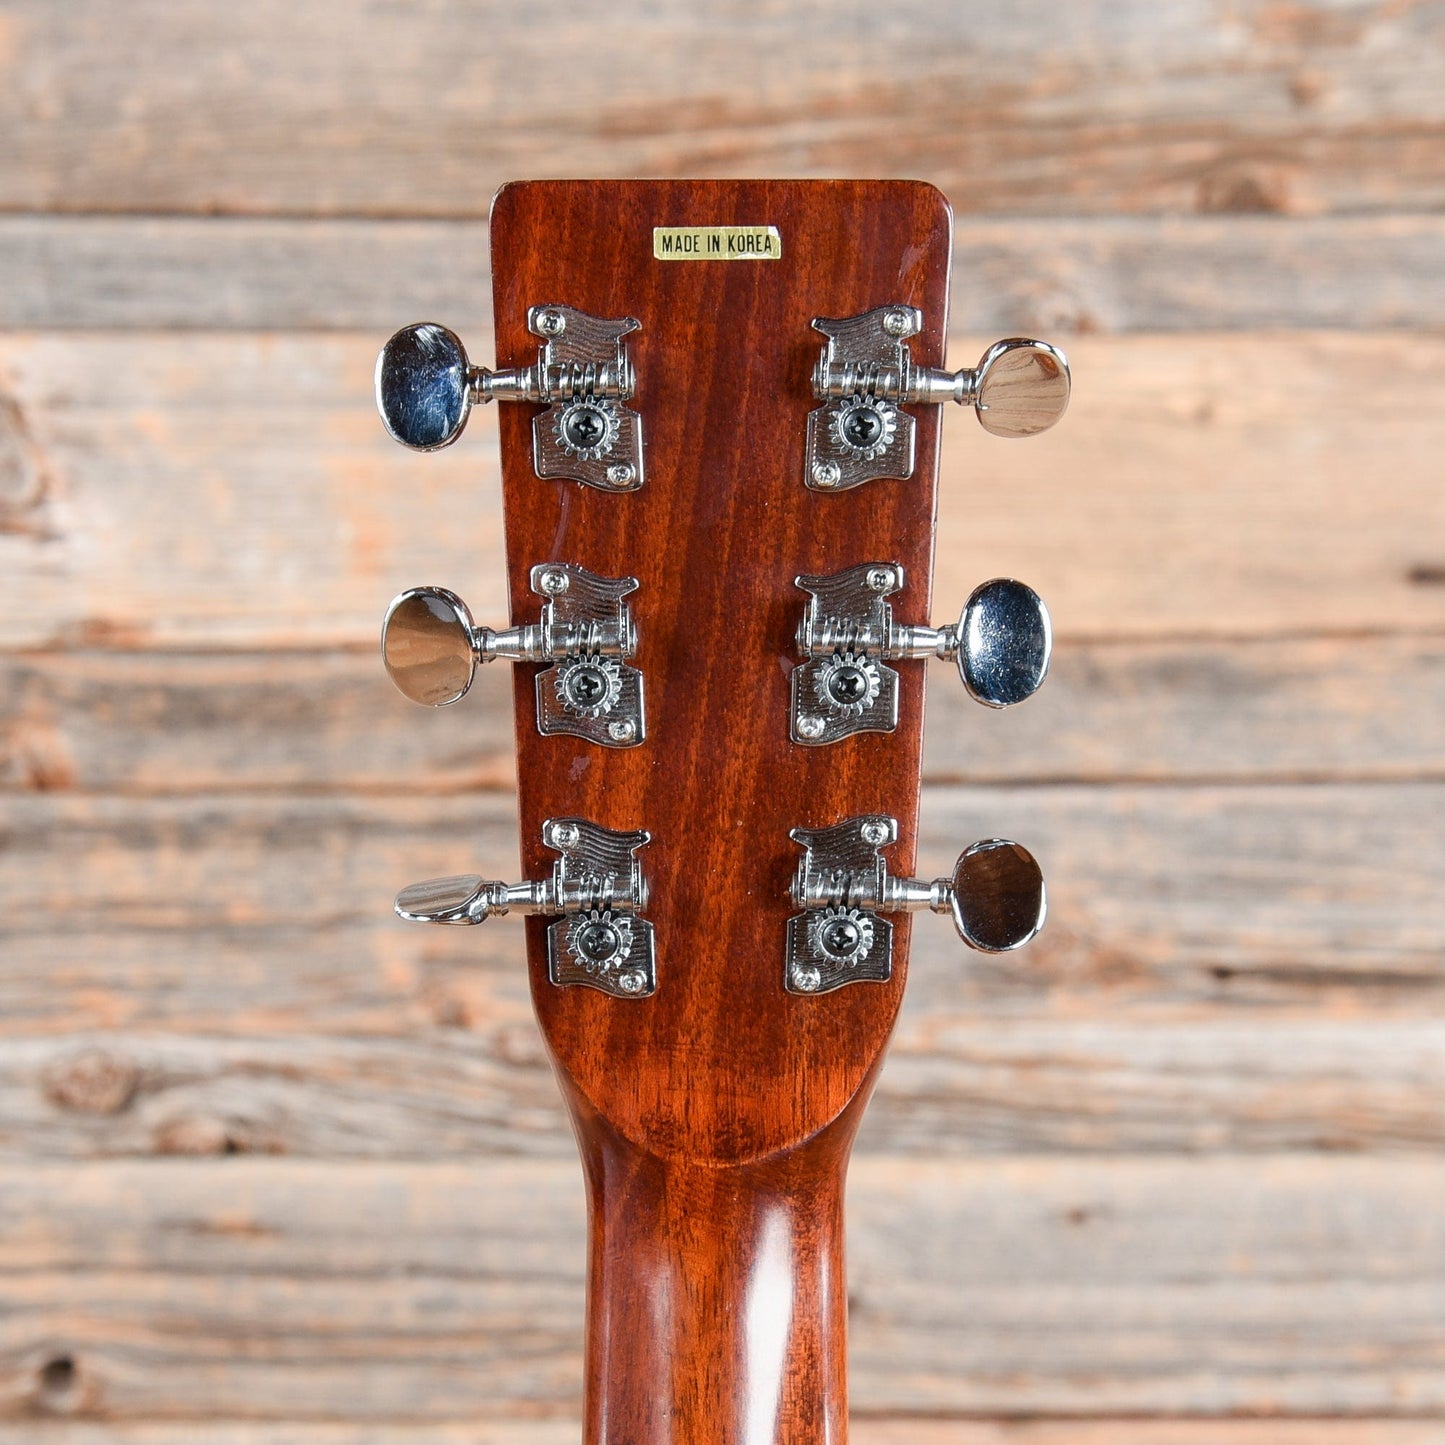 Sigma GCS3 Natural Acoustic Guitars / Concert